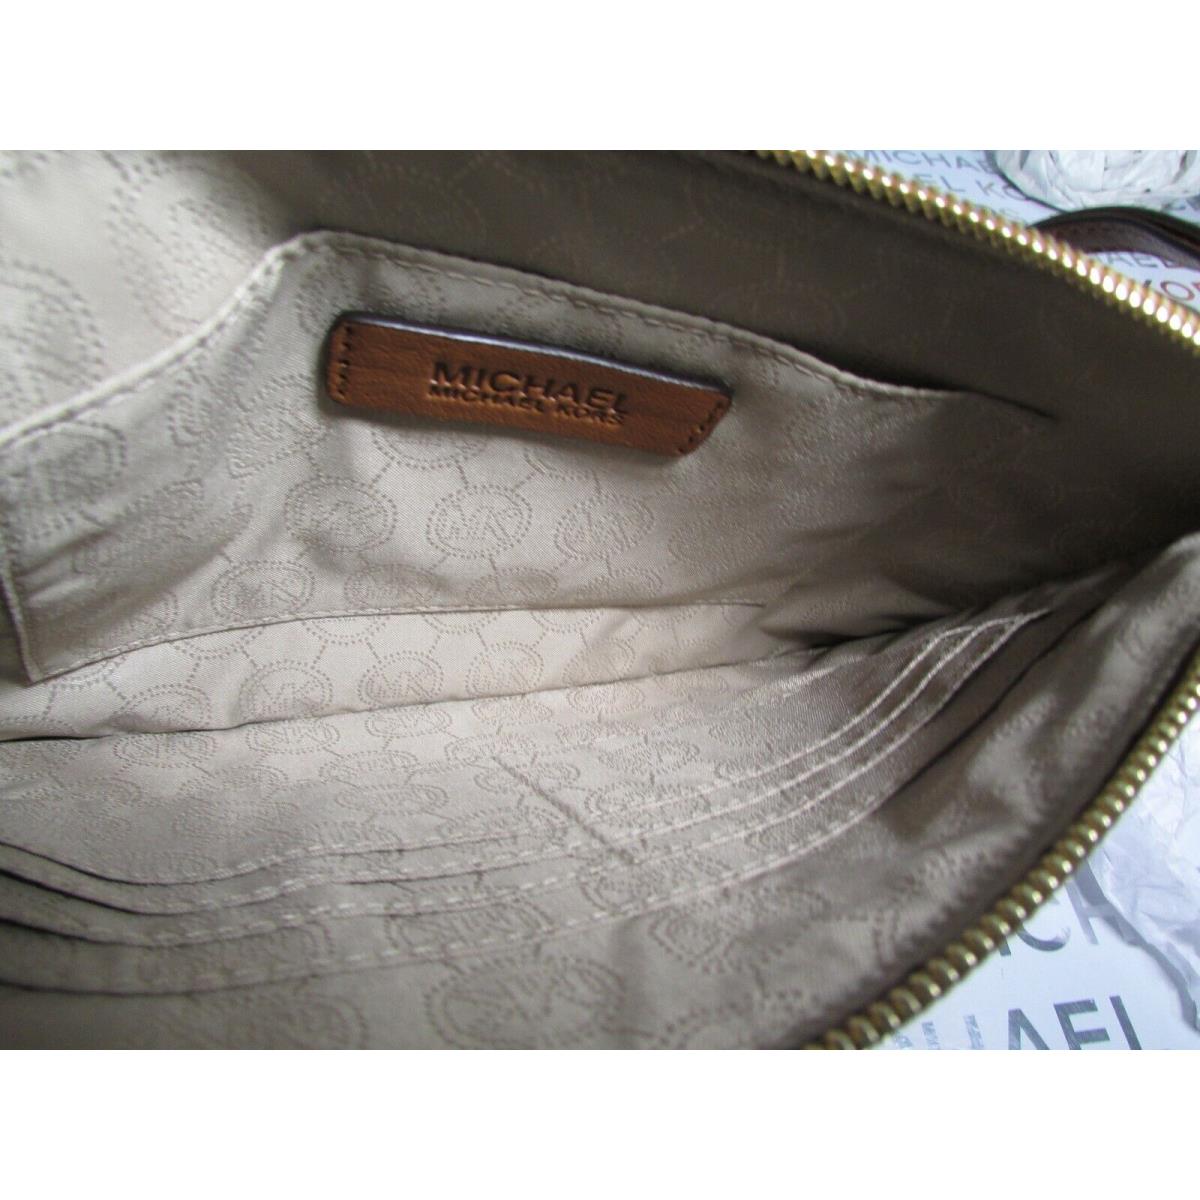 Michael Kors Leather Rhea Studded Large Zip Clutch Luggage or Chocolate